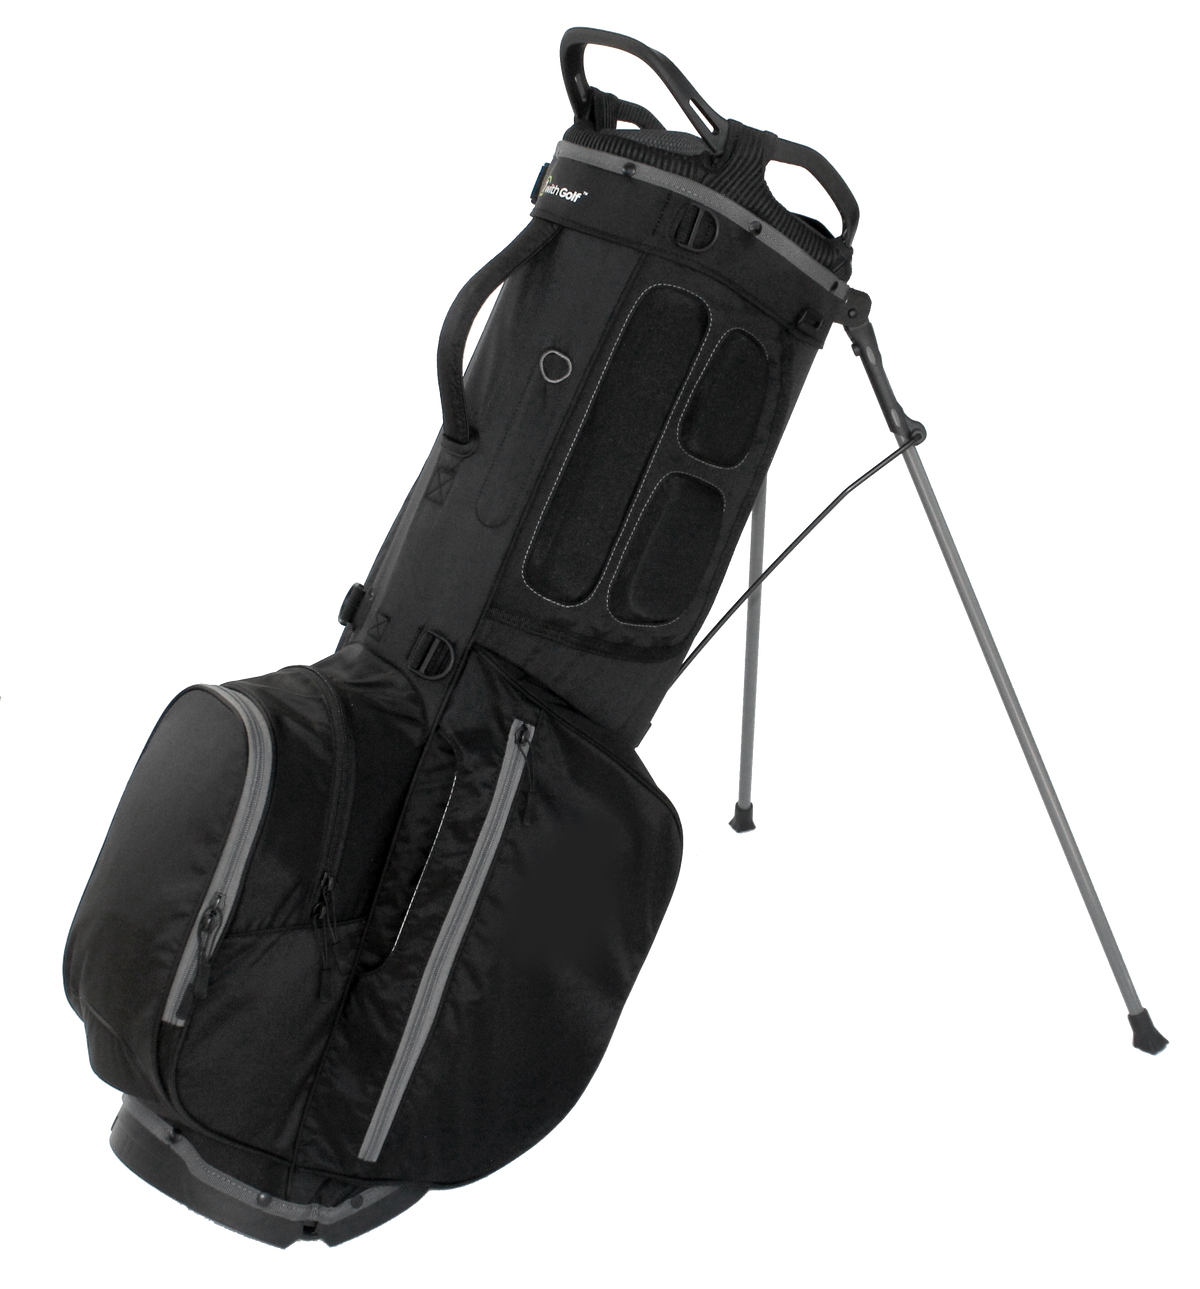 Gelding Sports Staff Style Golf Bag Small Size (Lexus)